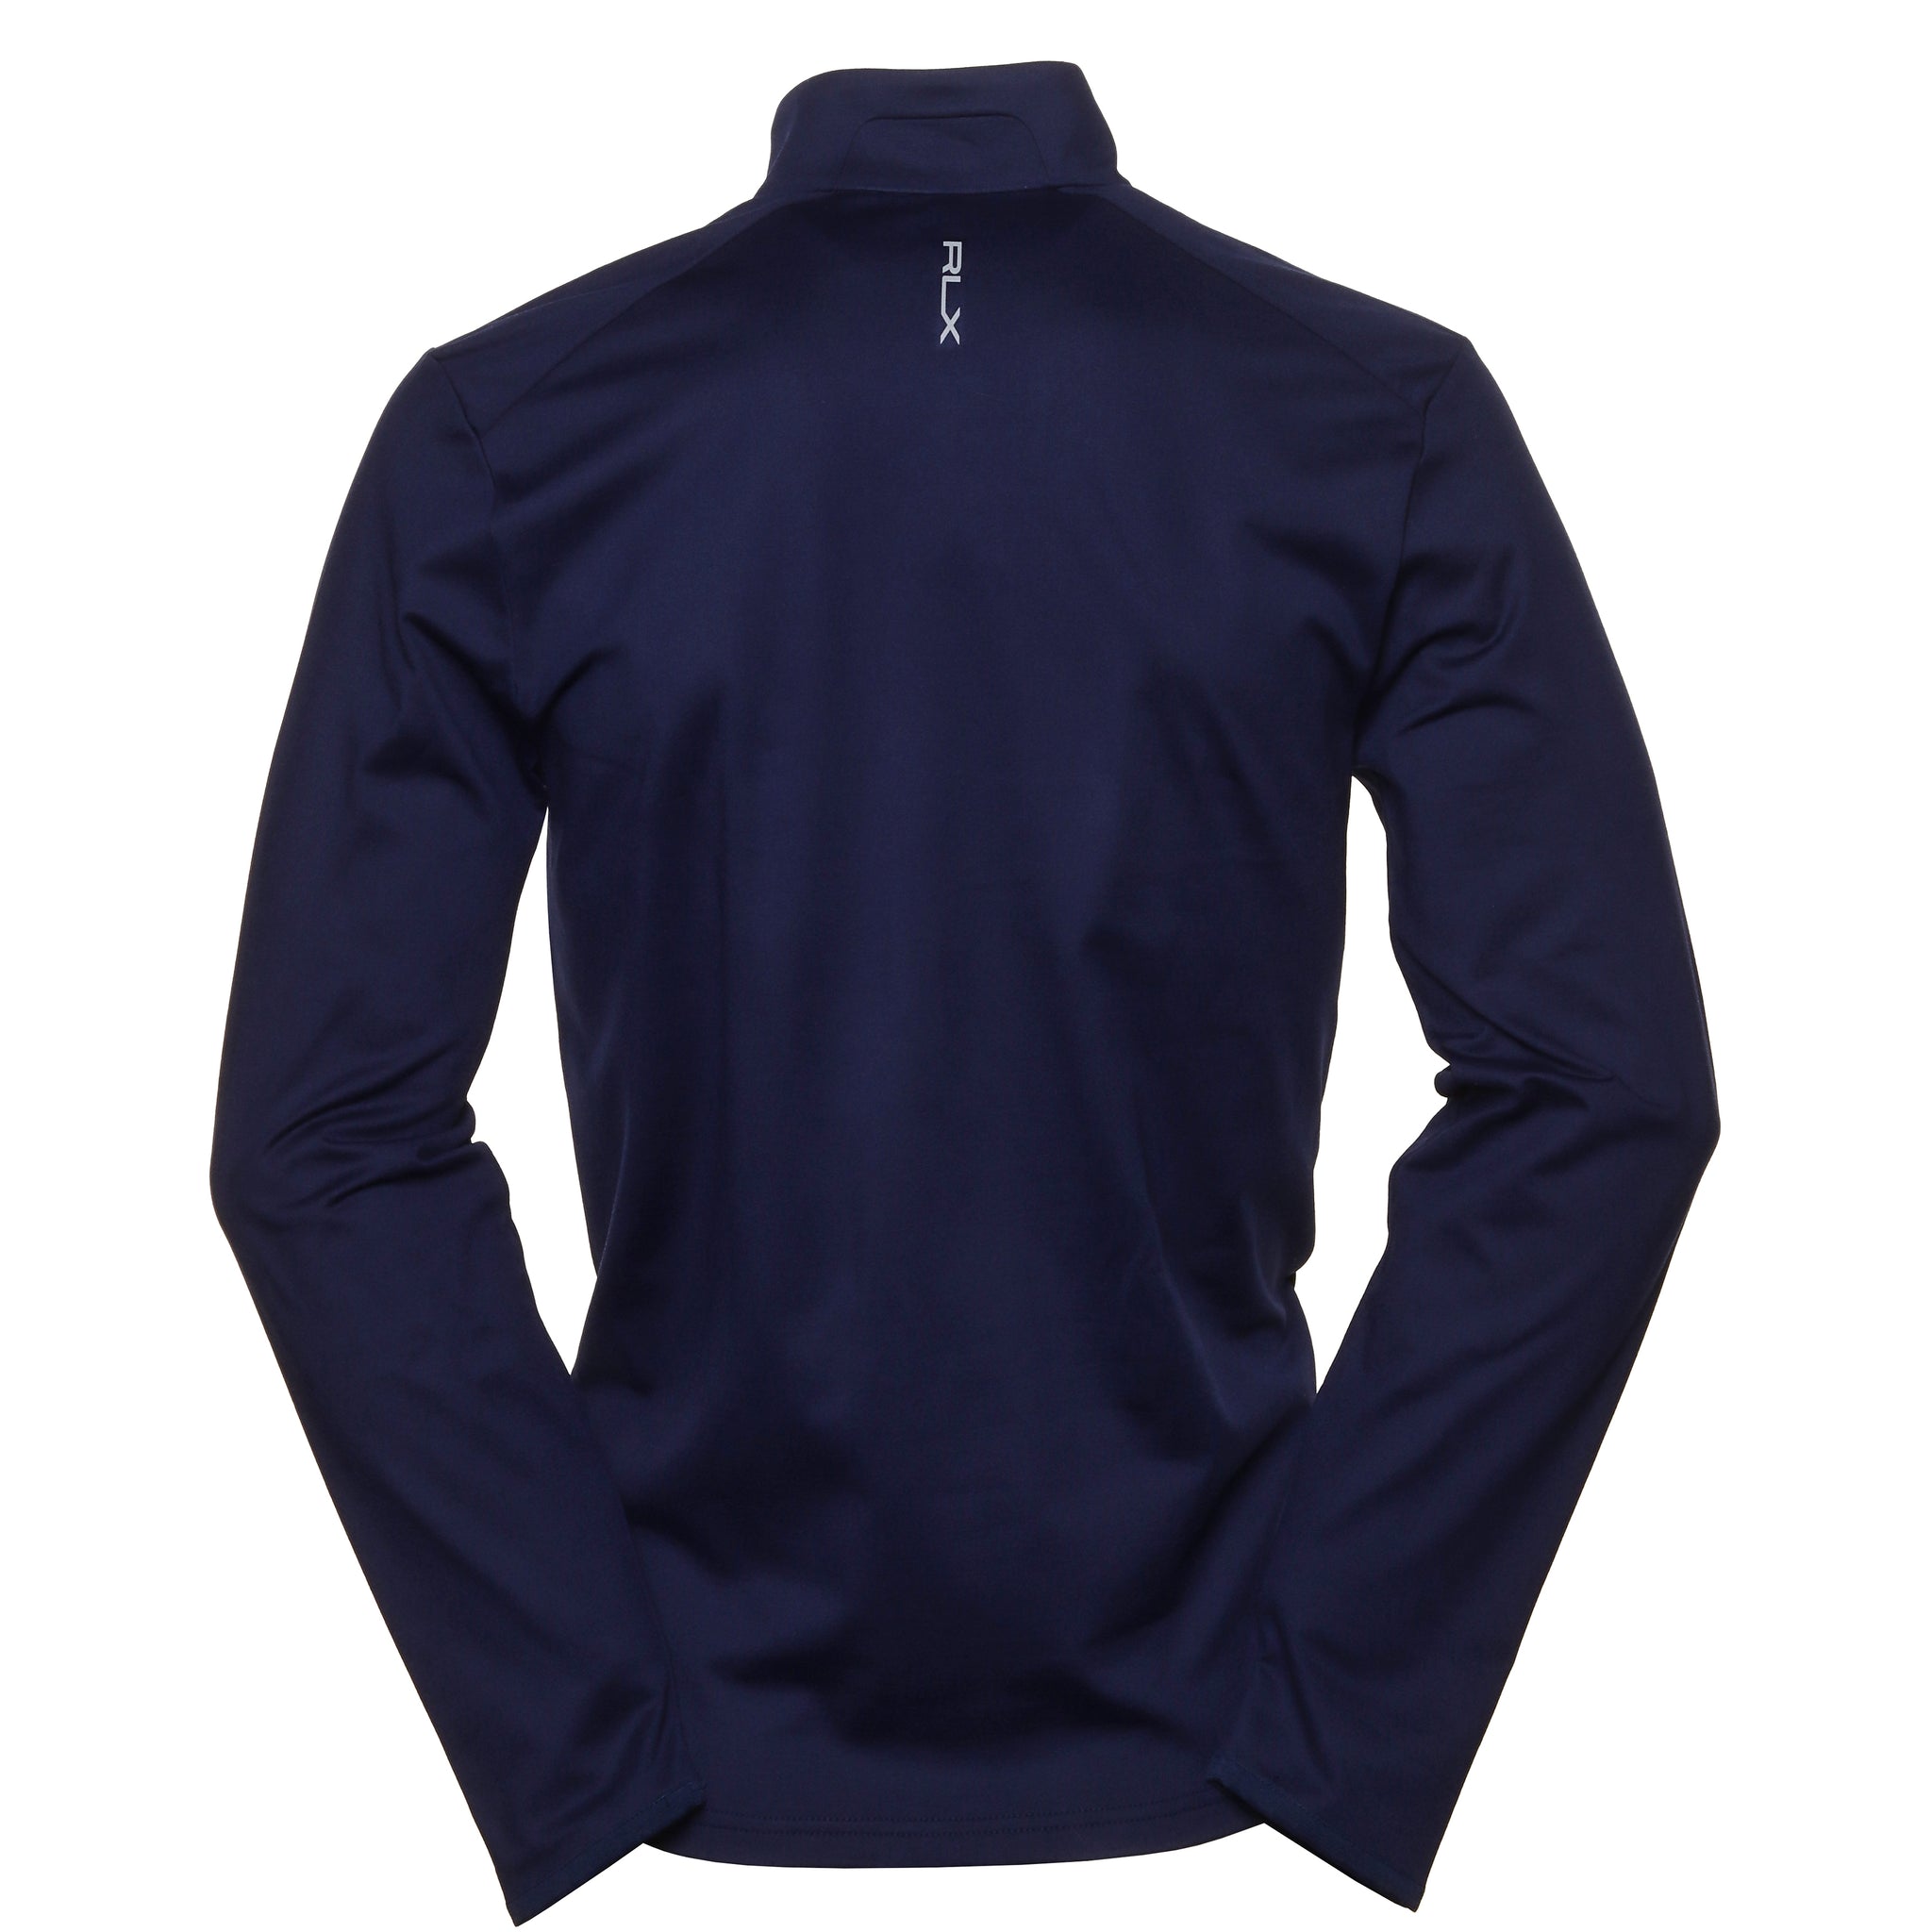 rlx-ralph-lauren-stretch-jersey-half-zip-785934090-refined-navy-002